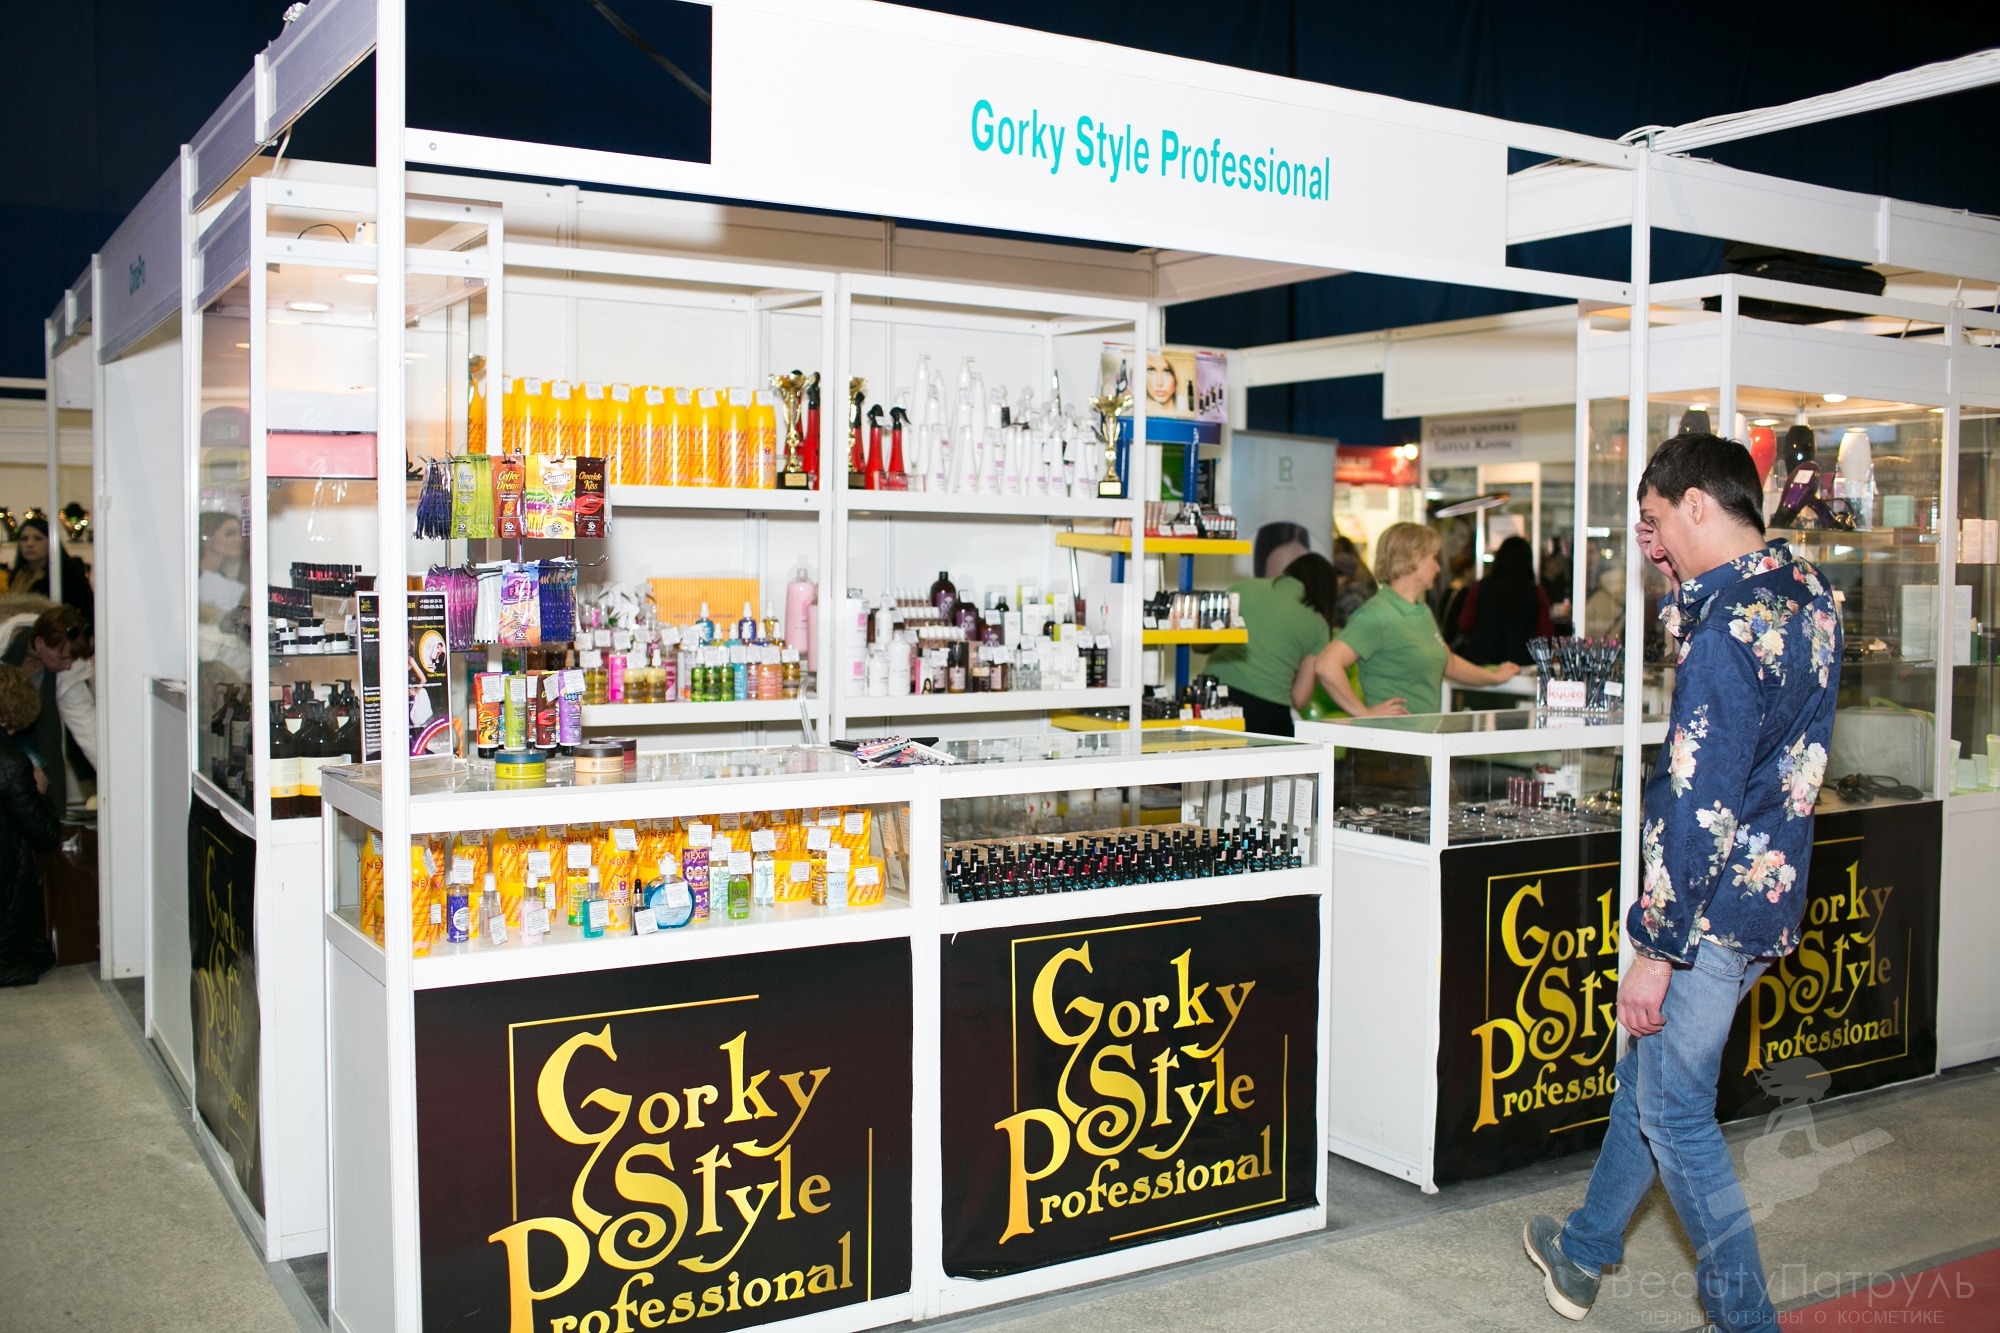 Gorky Style Professional - центр профессиональнйо косметики